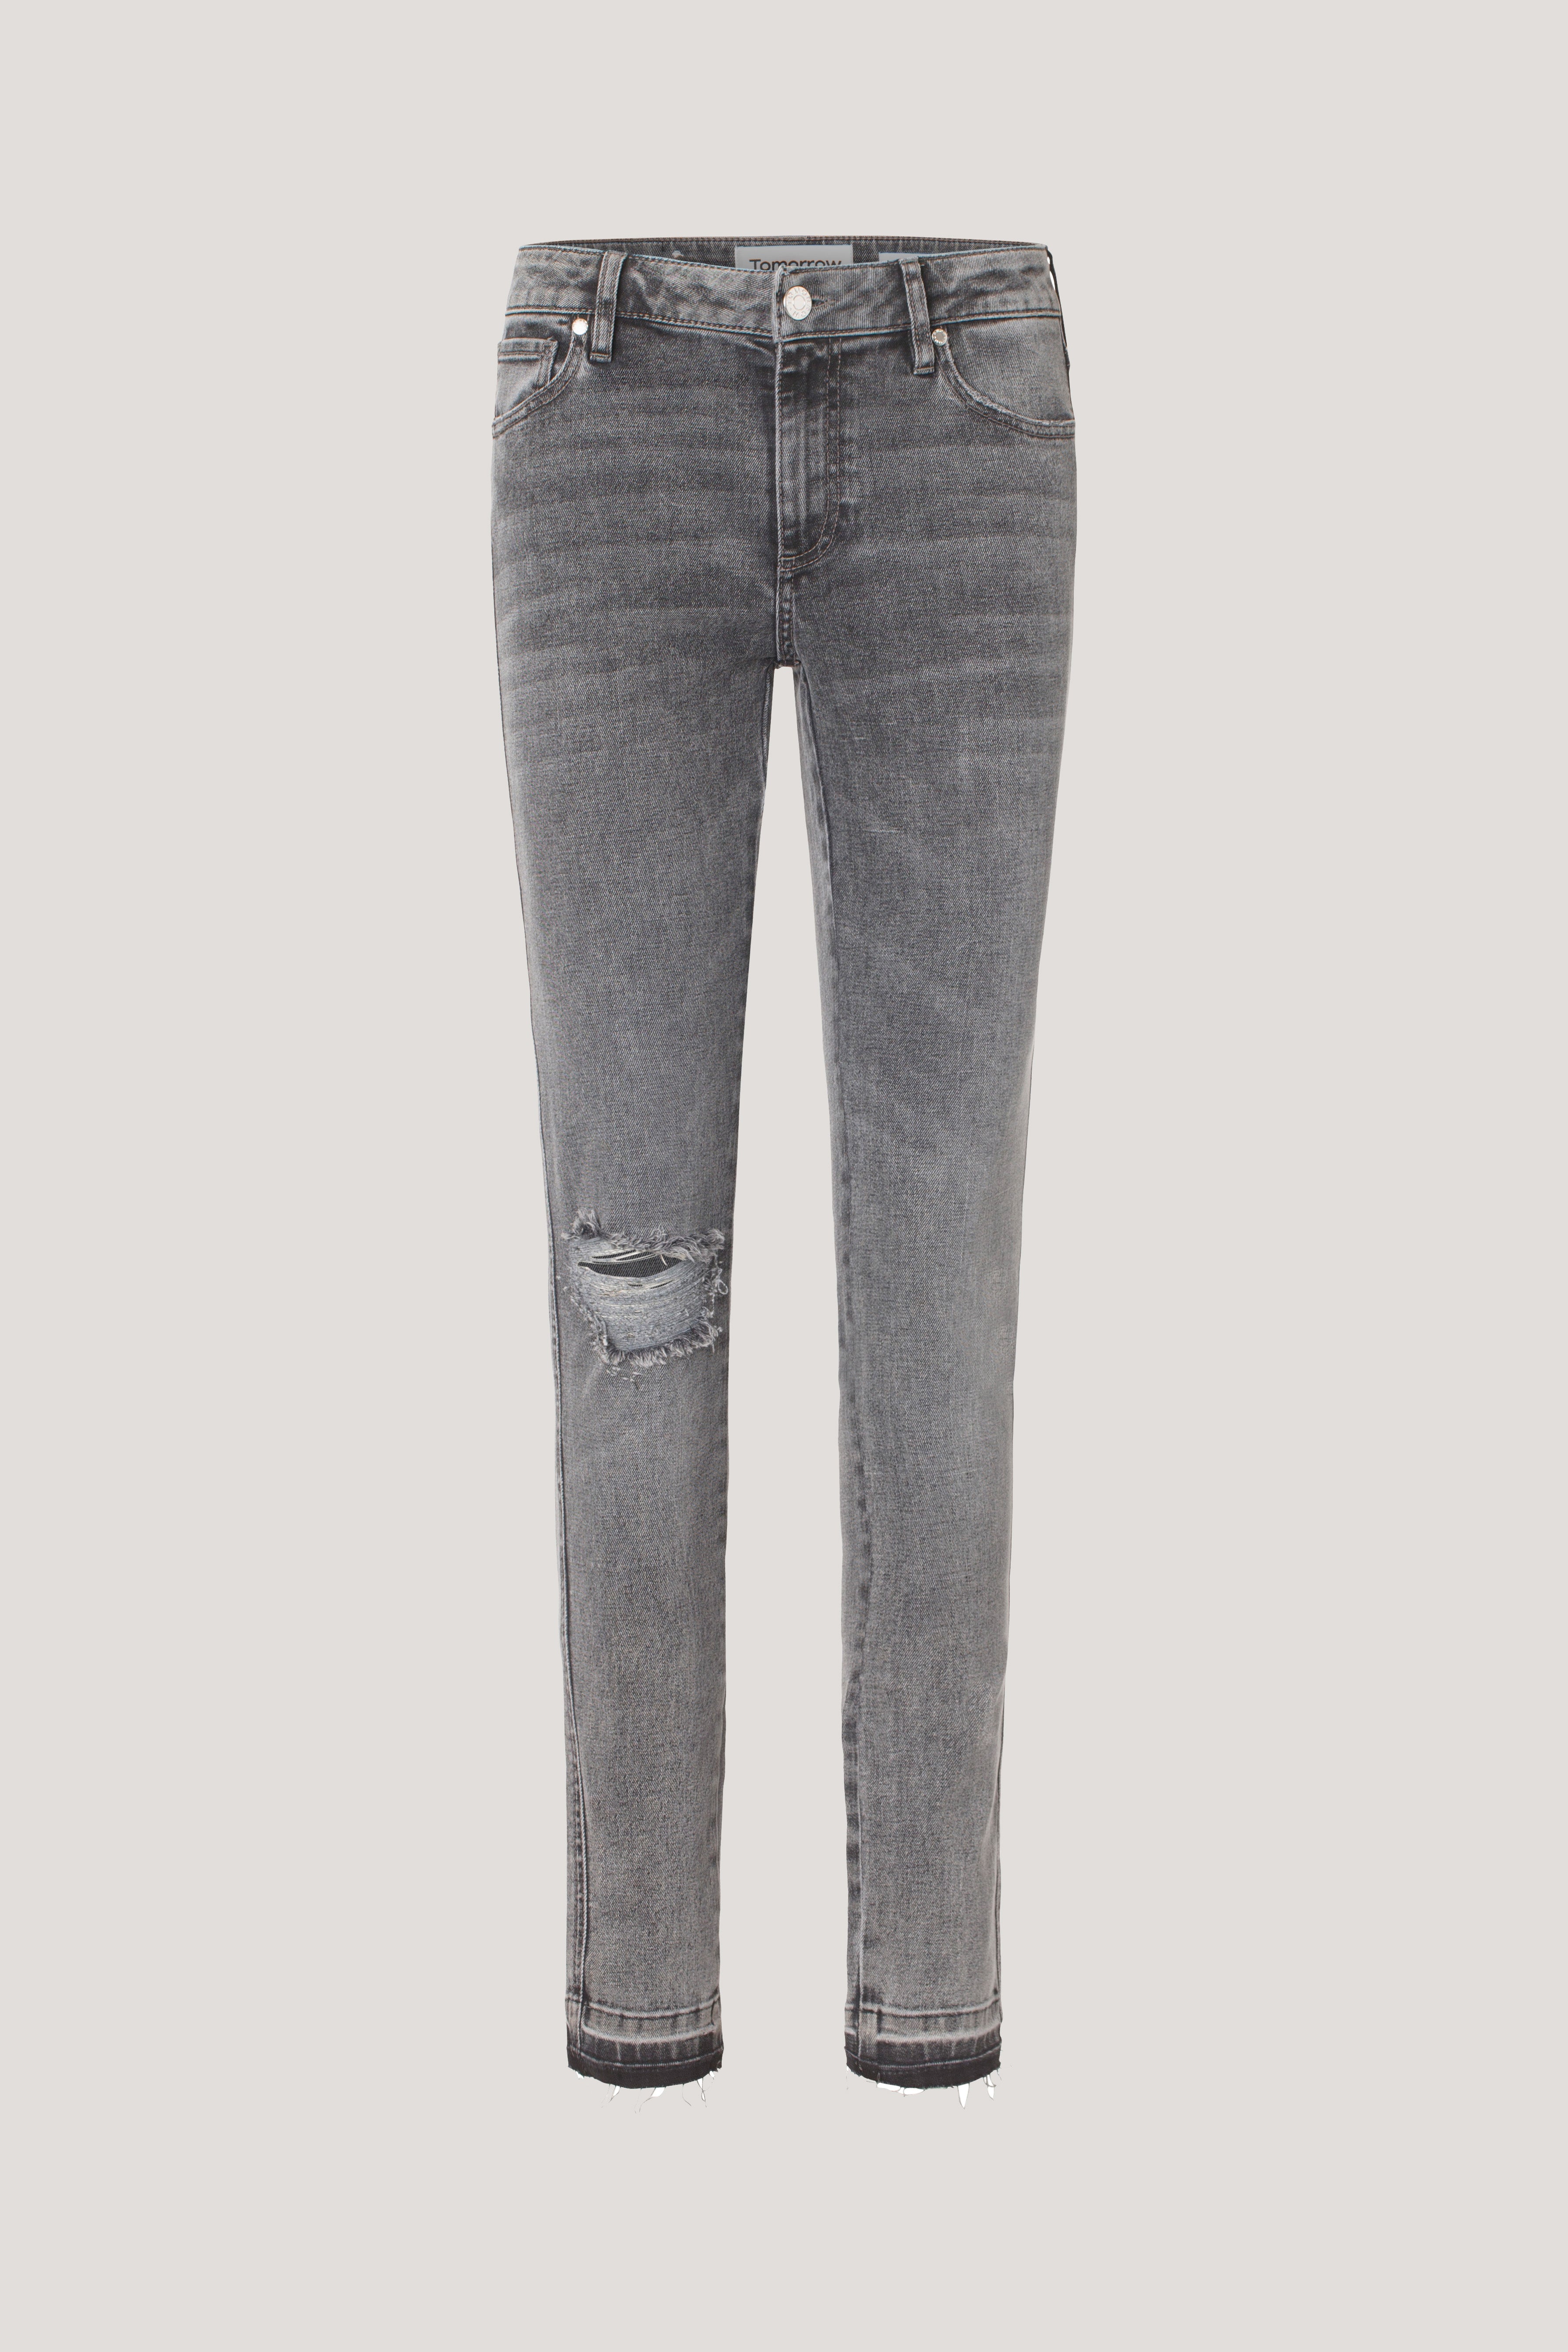 Tomorrow TD Dylan Skinny Jeans Wash Vintage Gre Jeans & Pants 8 Grey